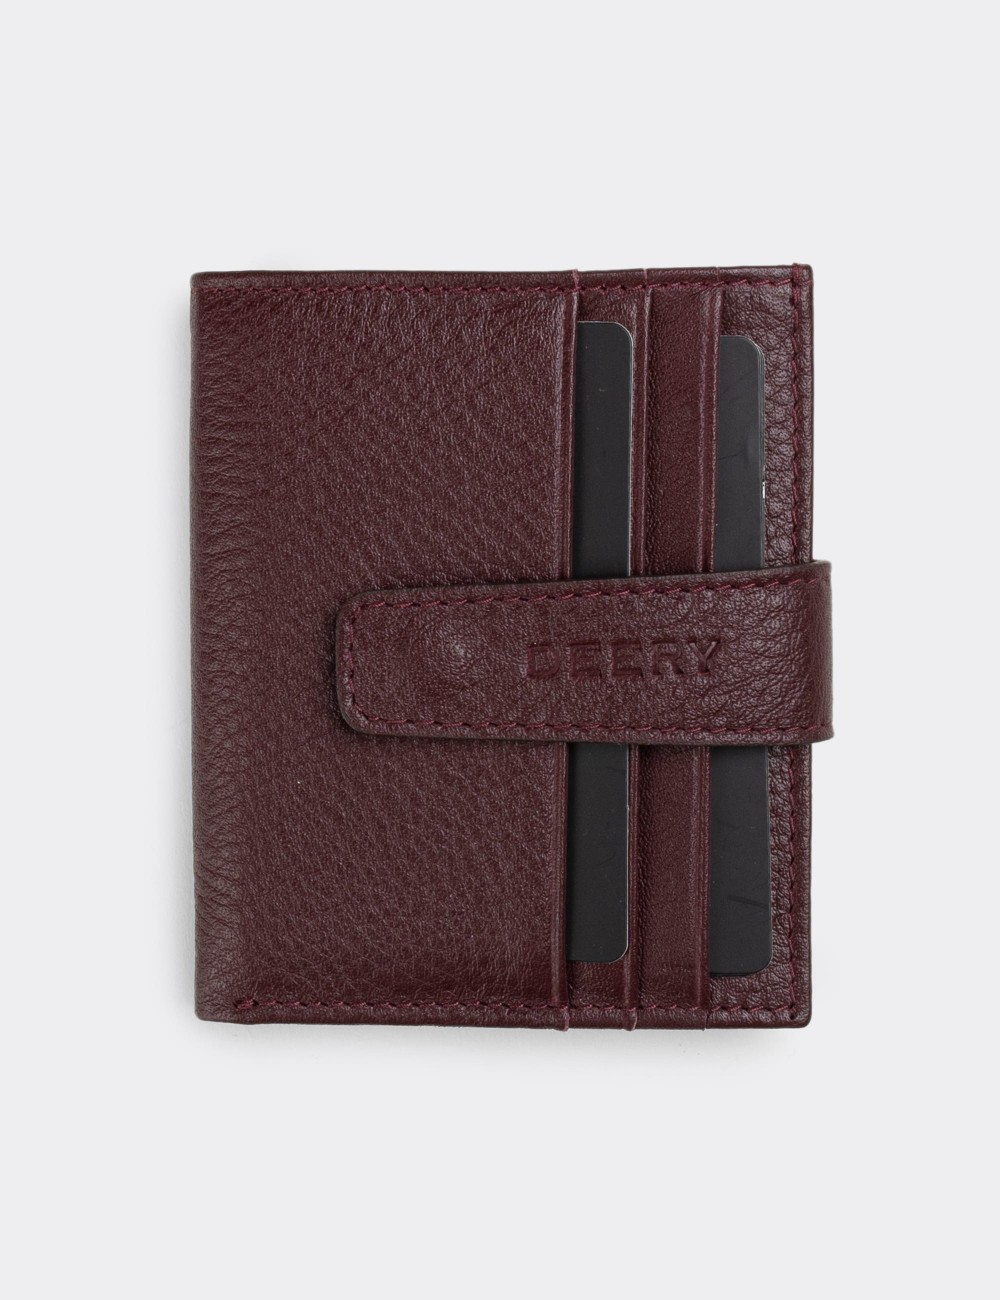  Leather Burgundy Men's Wallet - 00518MBRDZ01